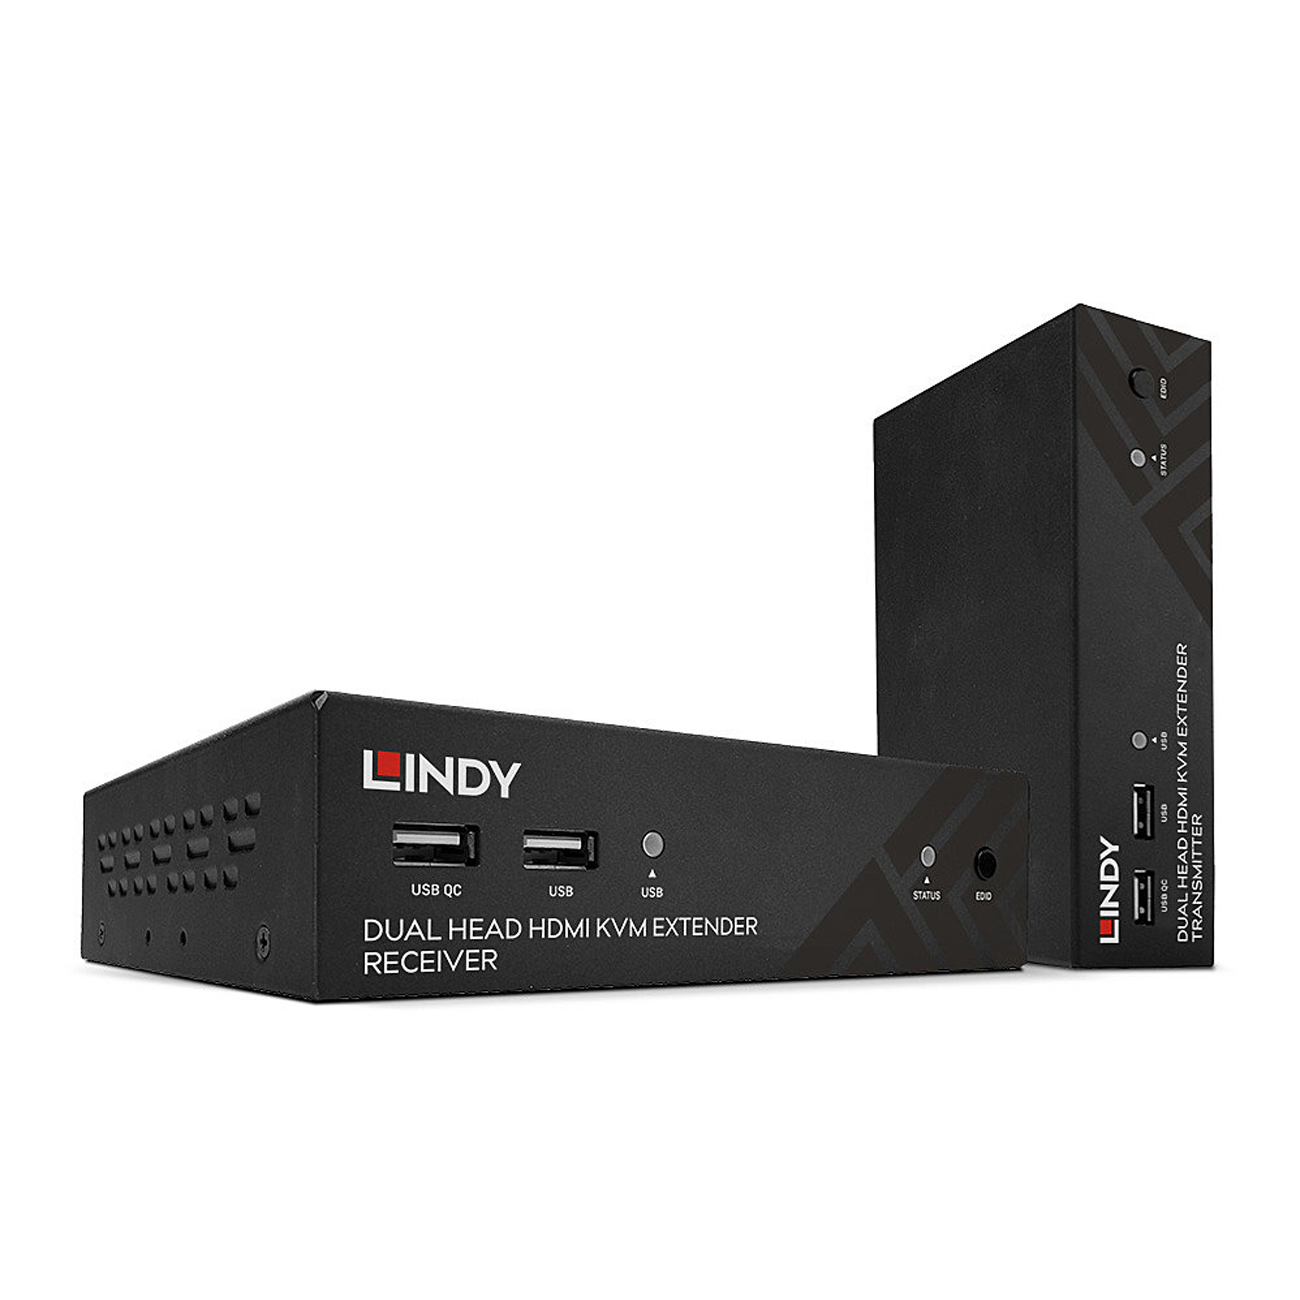 LINDY 100m Cat.6 Dual Head HDMI, USB & RS232 Extender - 39374